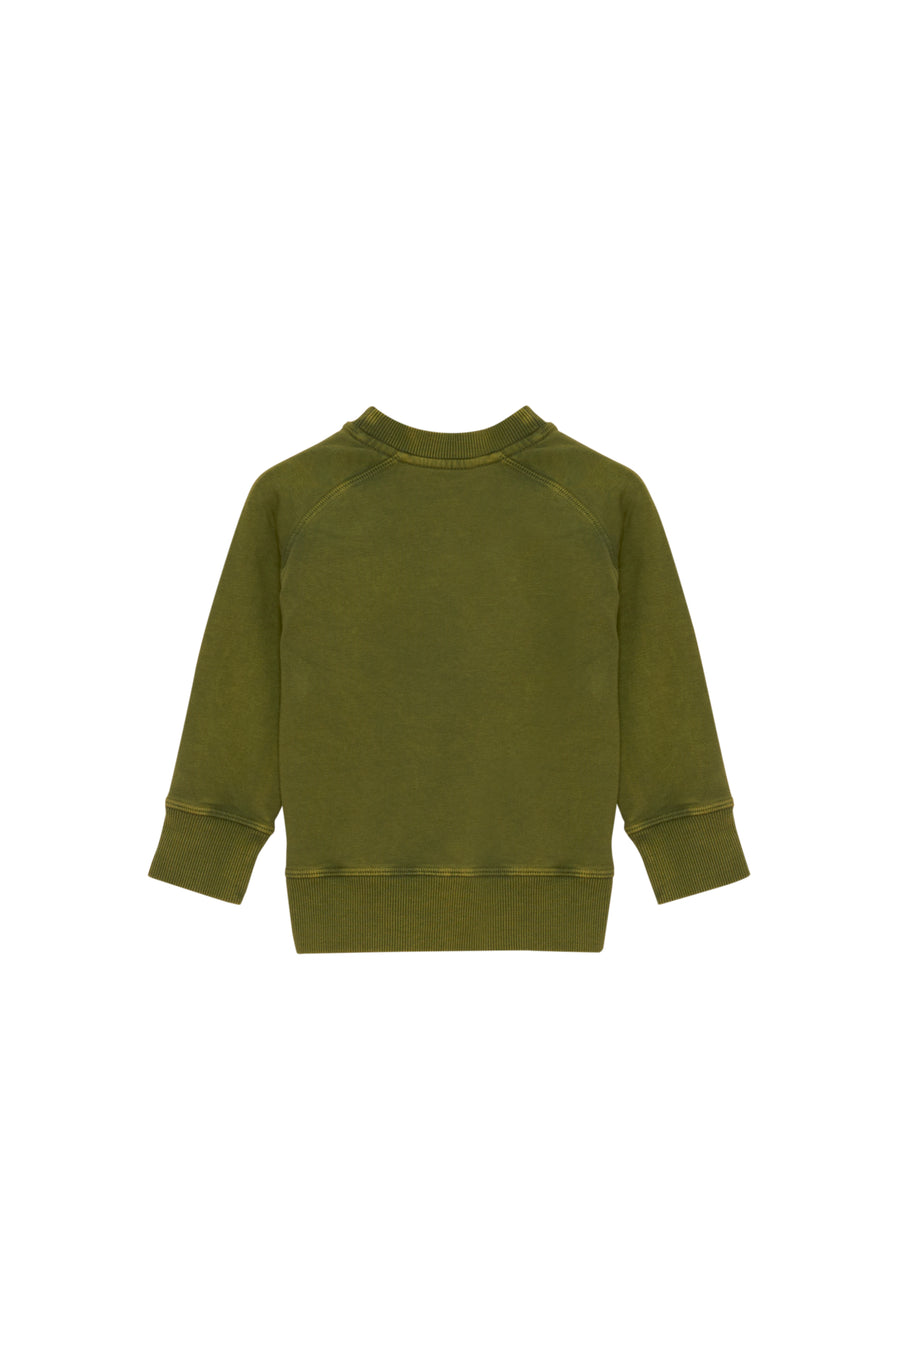 Tropical green sweater girl